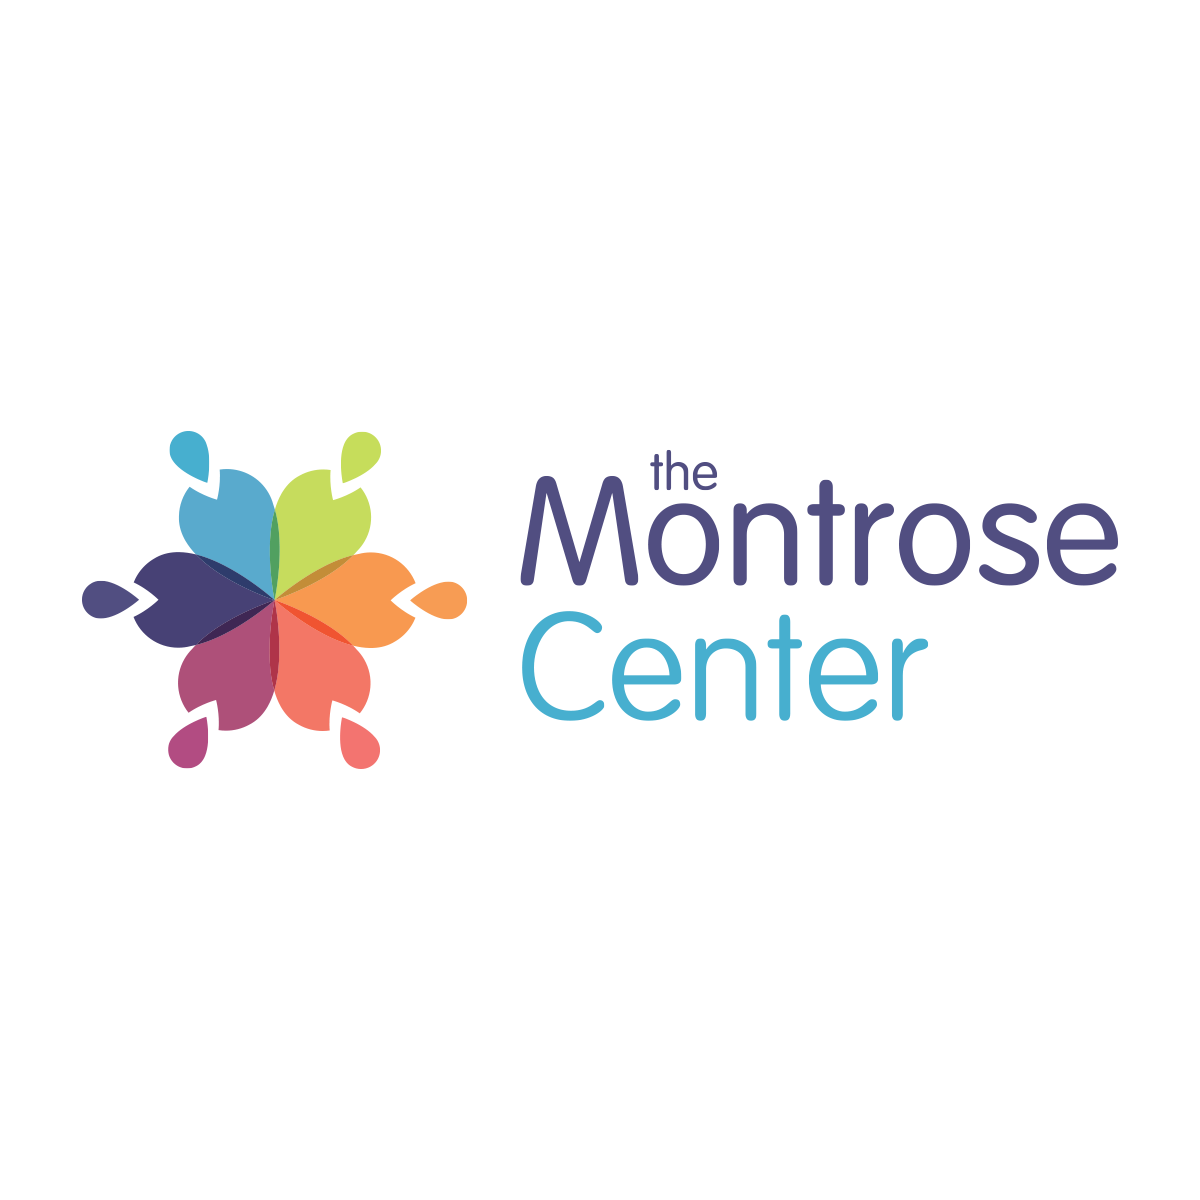 LGBTQ Organization in Austin Texas - The Montrose Center